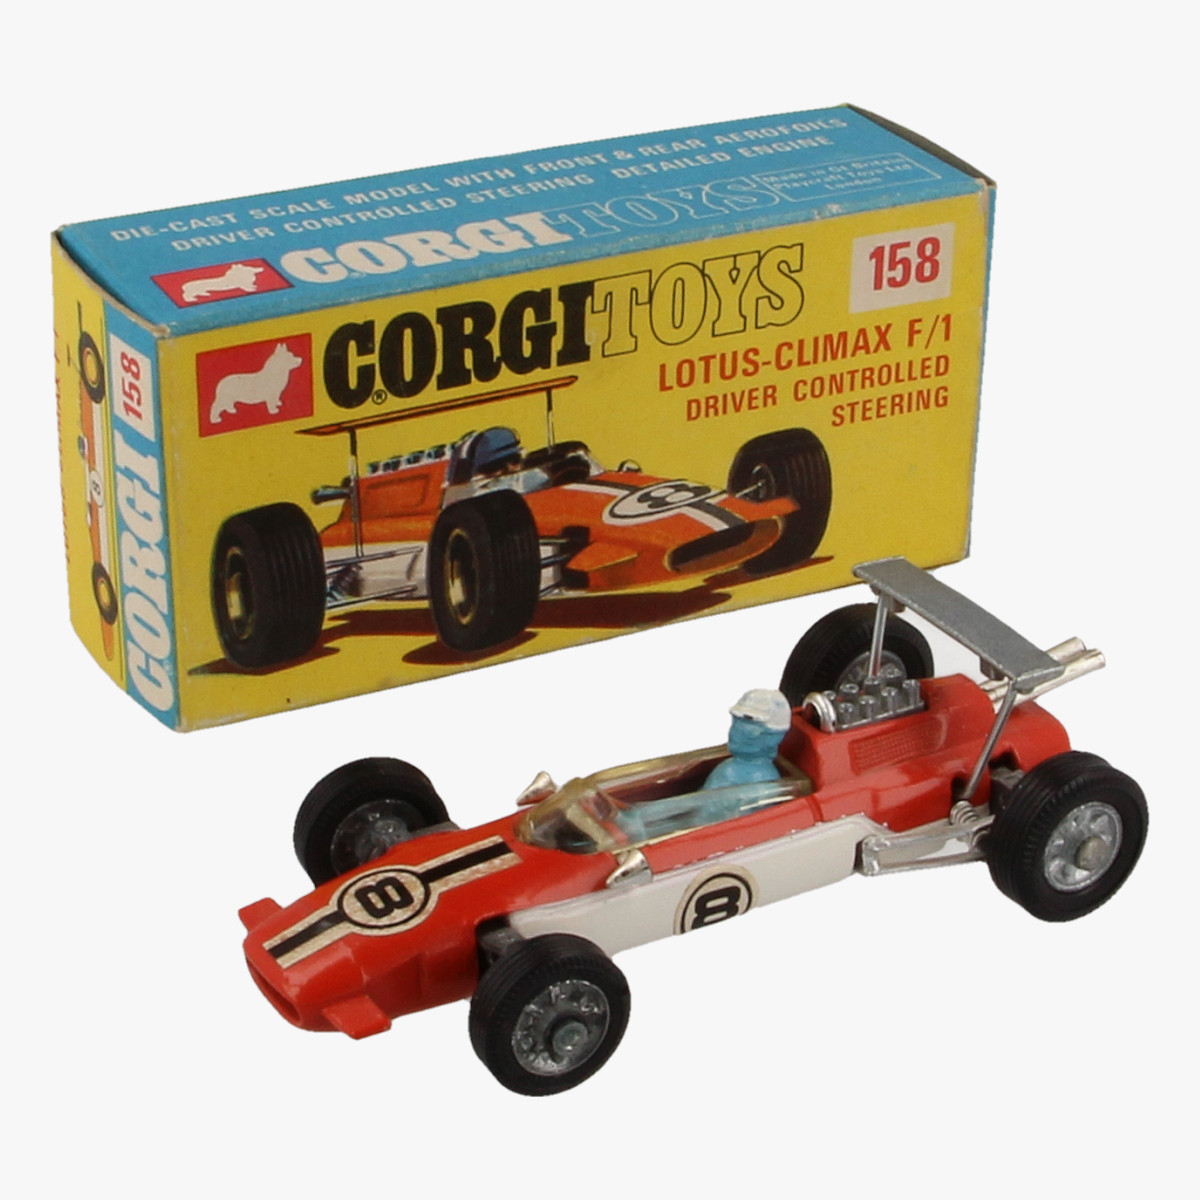 Afbeeldingen van Corgi Toys. Lotus Climax F/1 Nr. 158